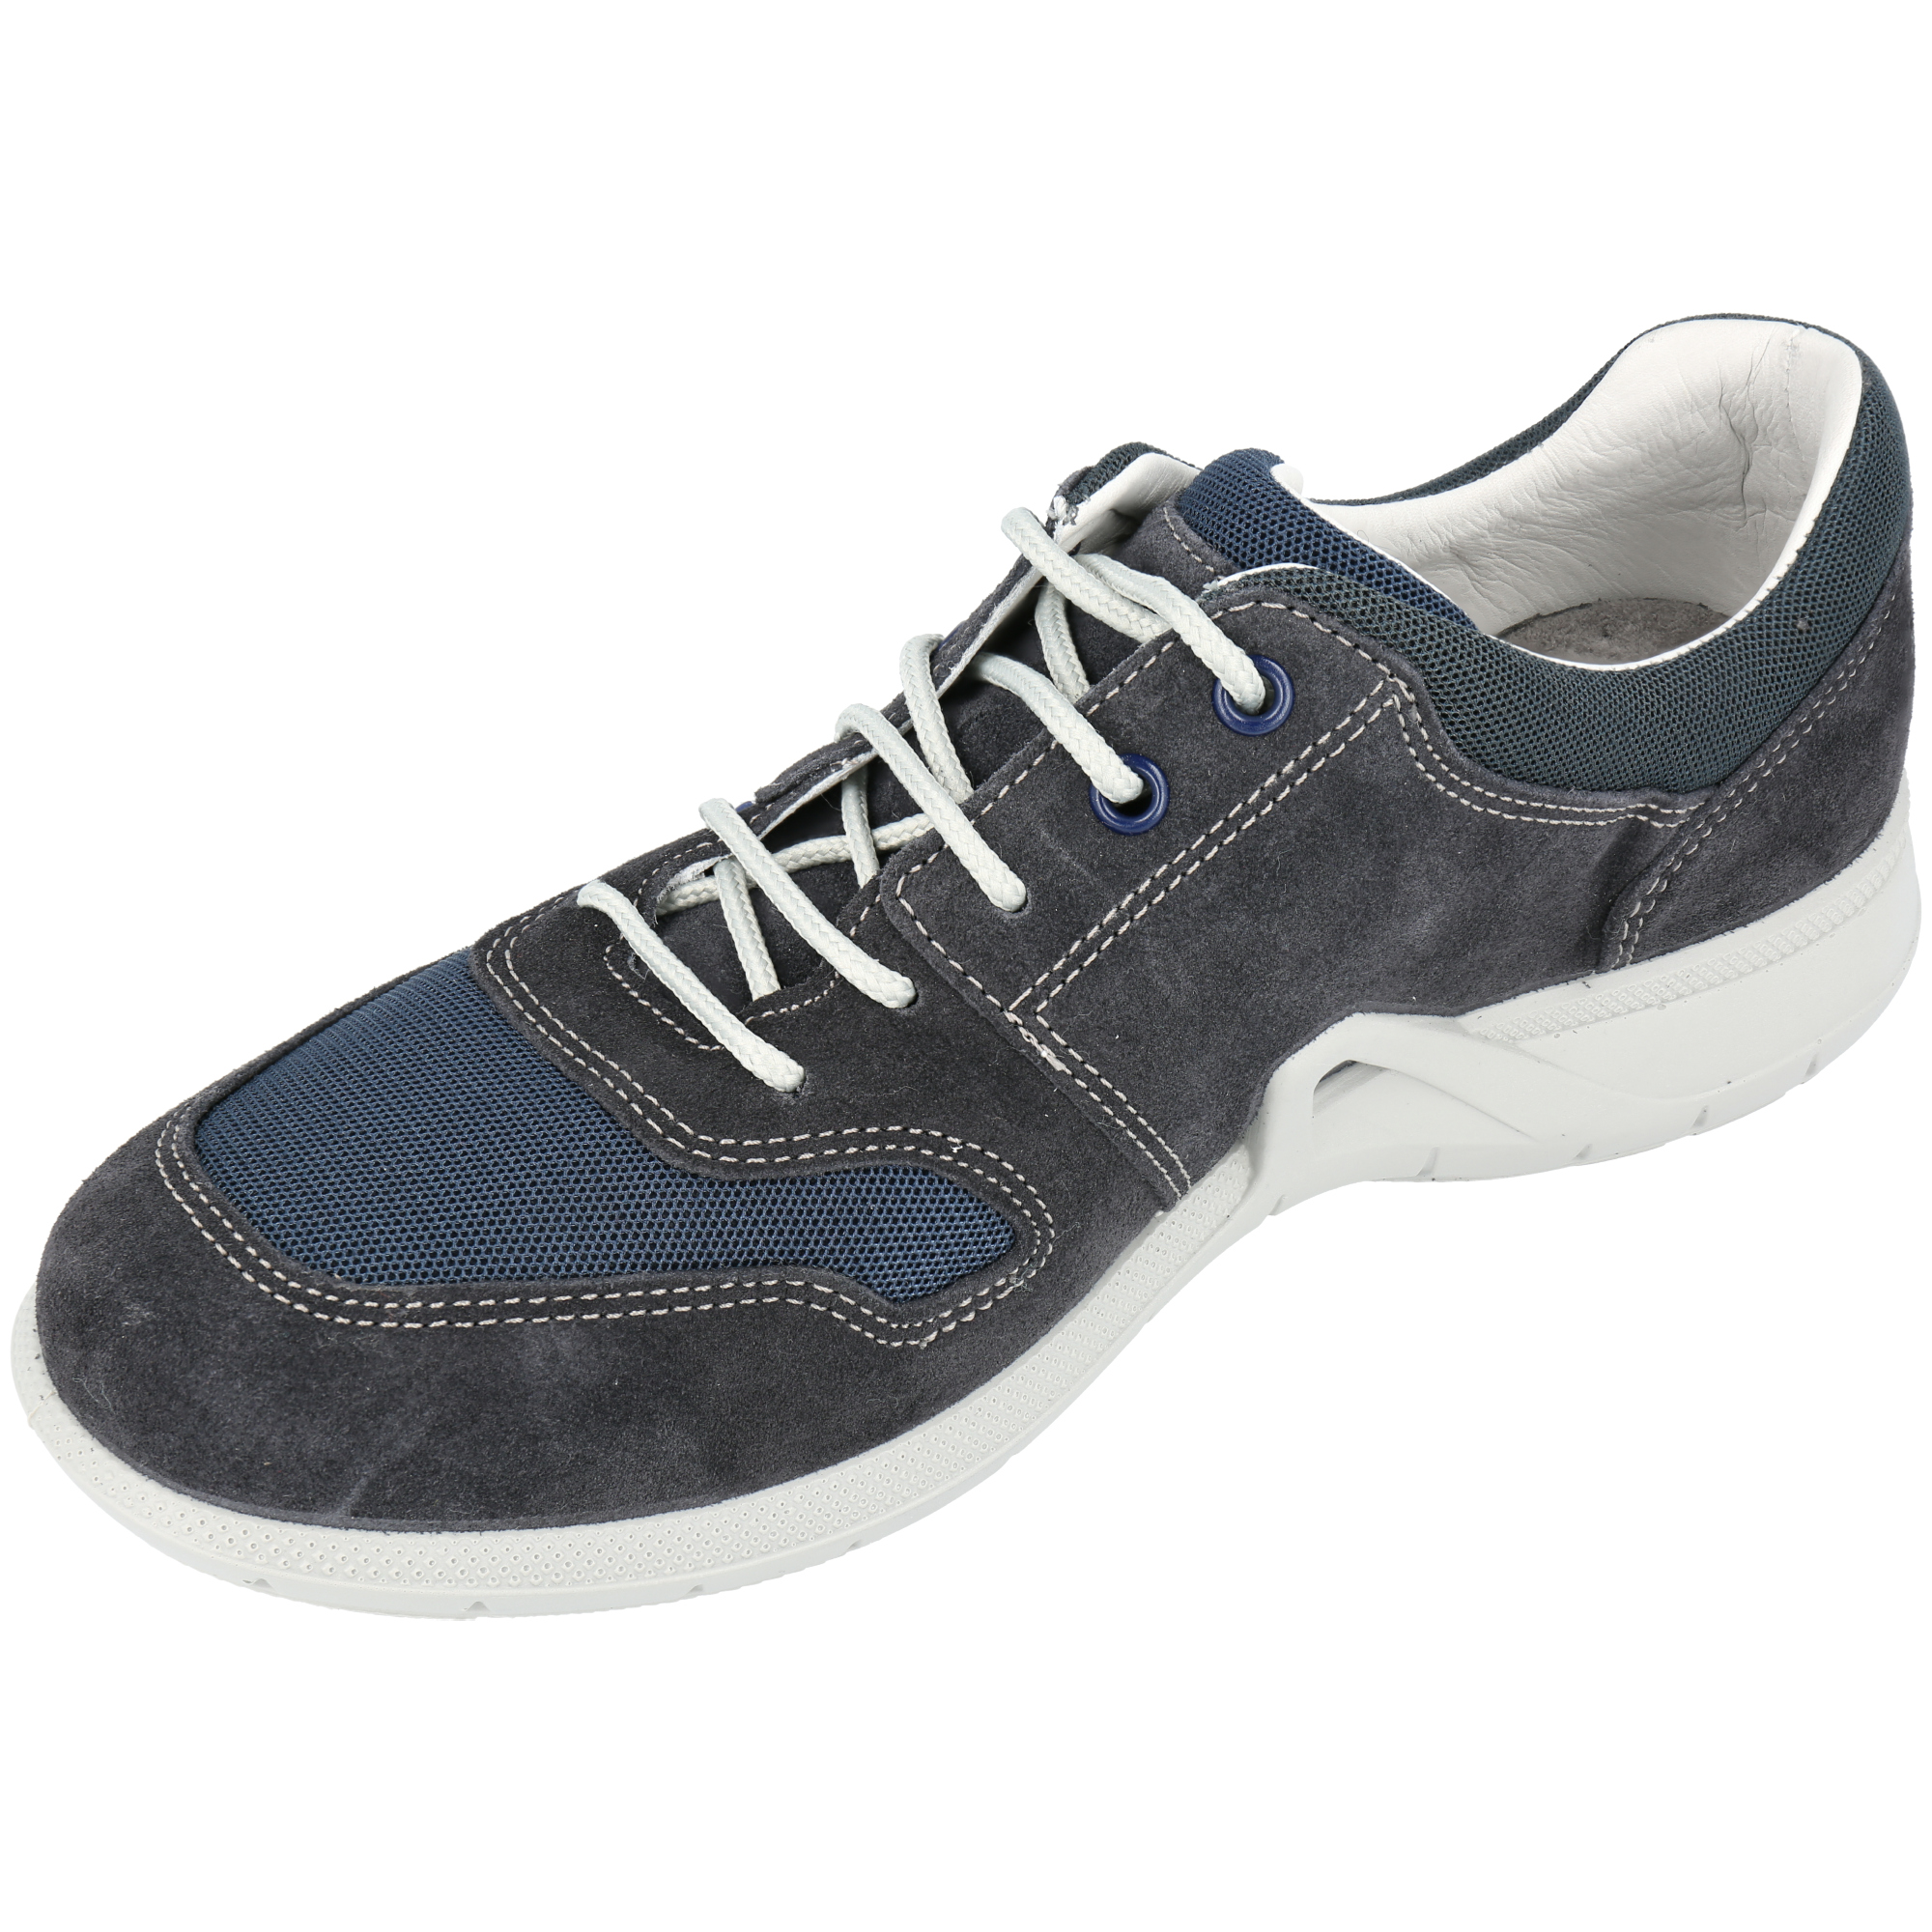 Grisport pantofi sport din piele naturala, talpa turnata, foarte comozi, Polux 2